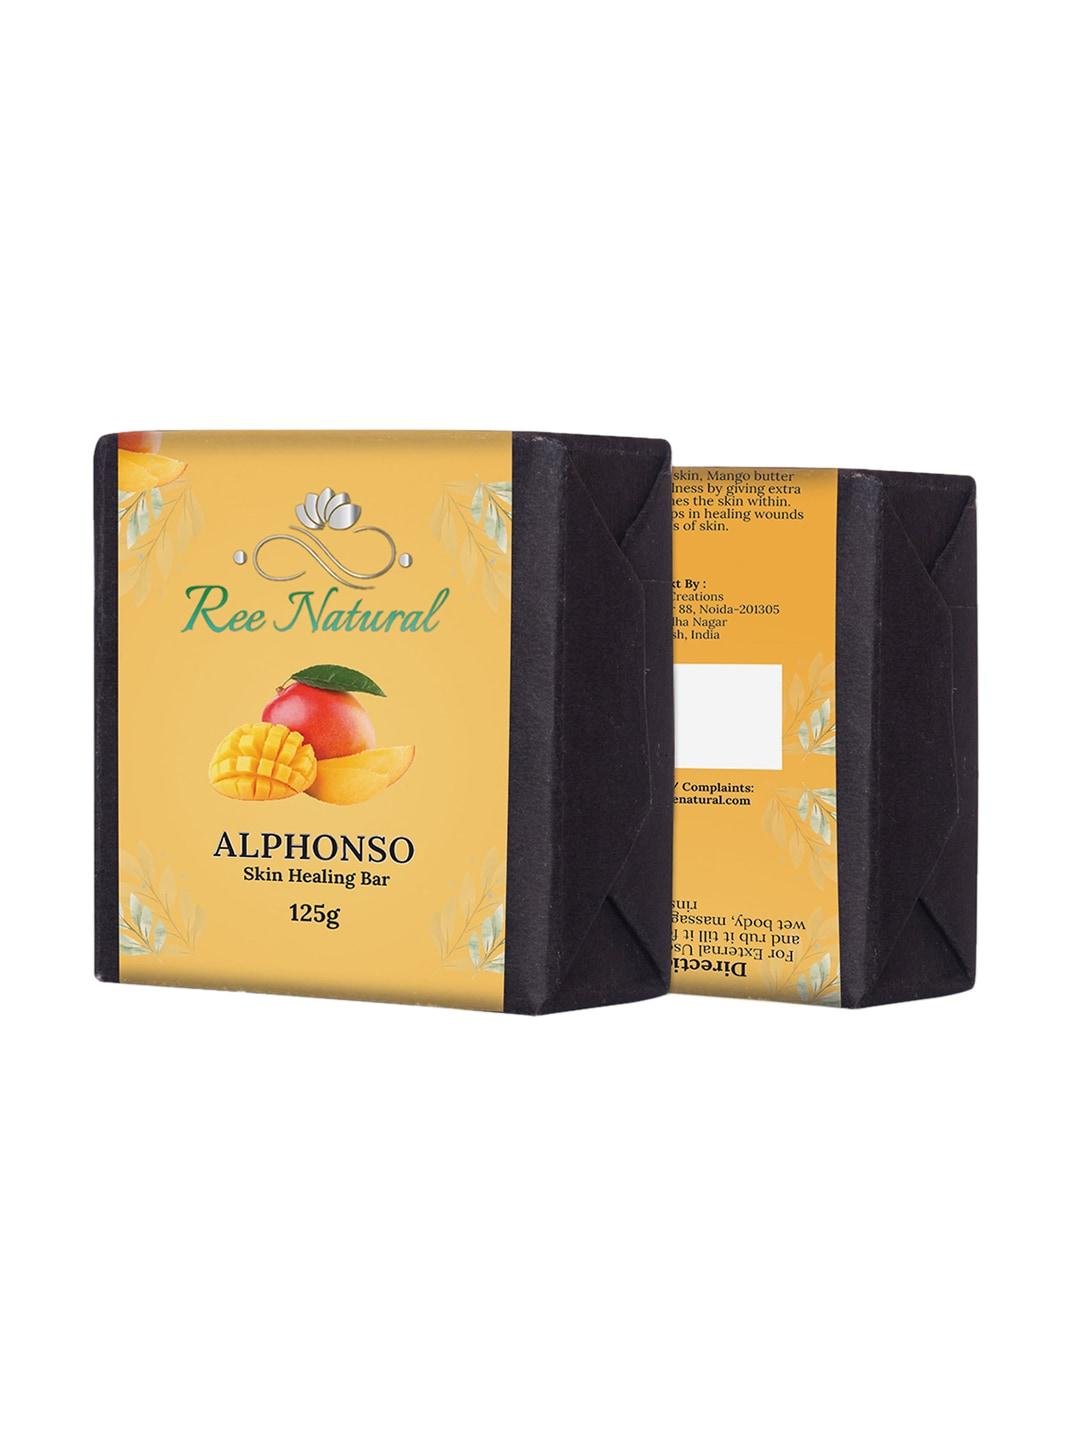 Ree Natural Cold Processed Alphonso Skin Healing Bar - 125g